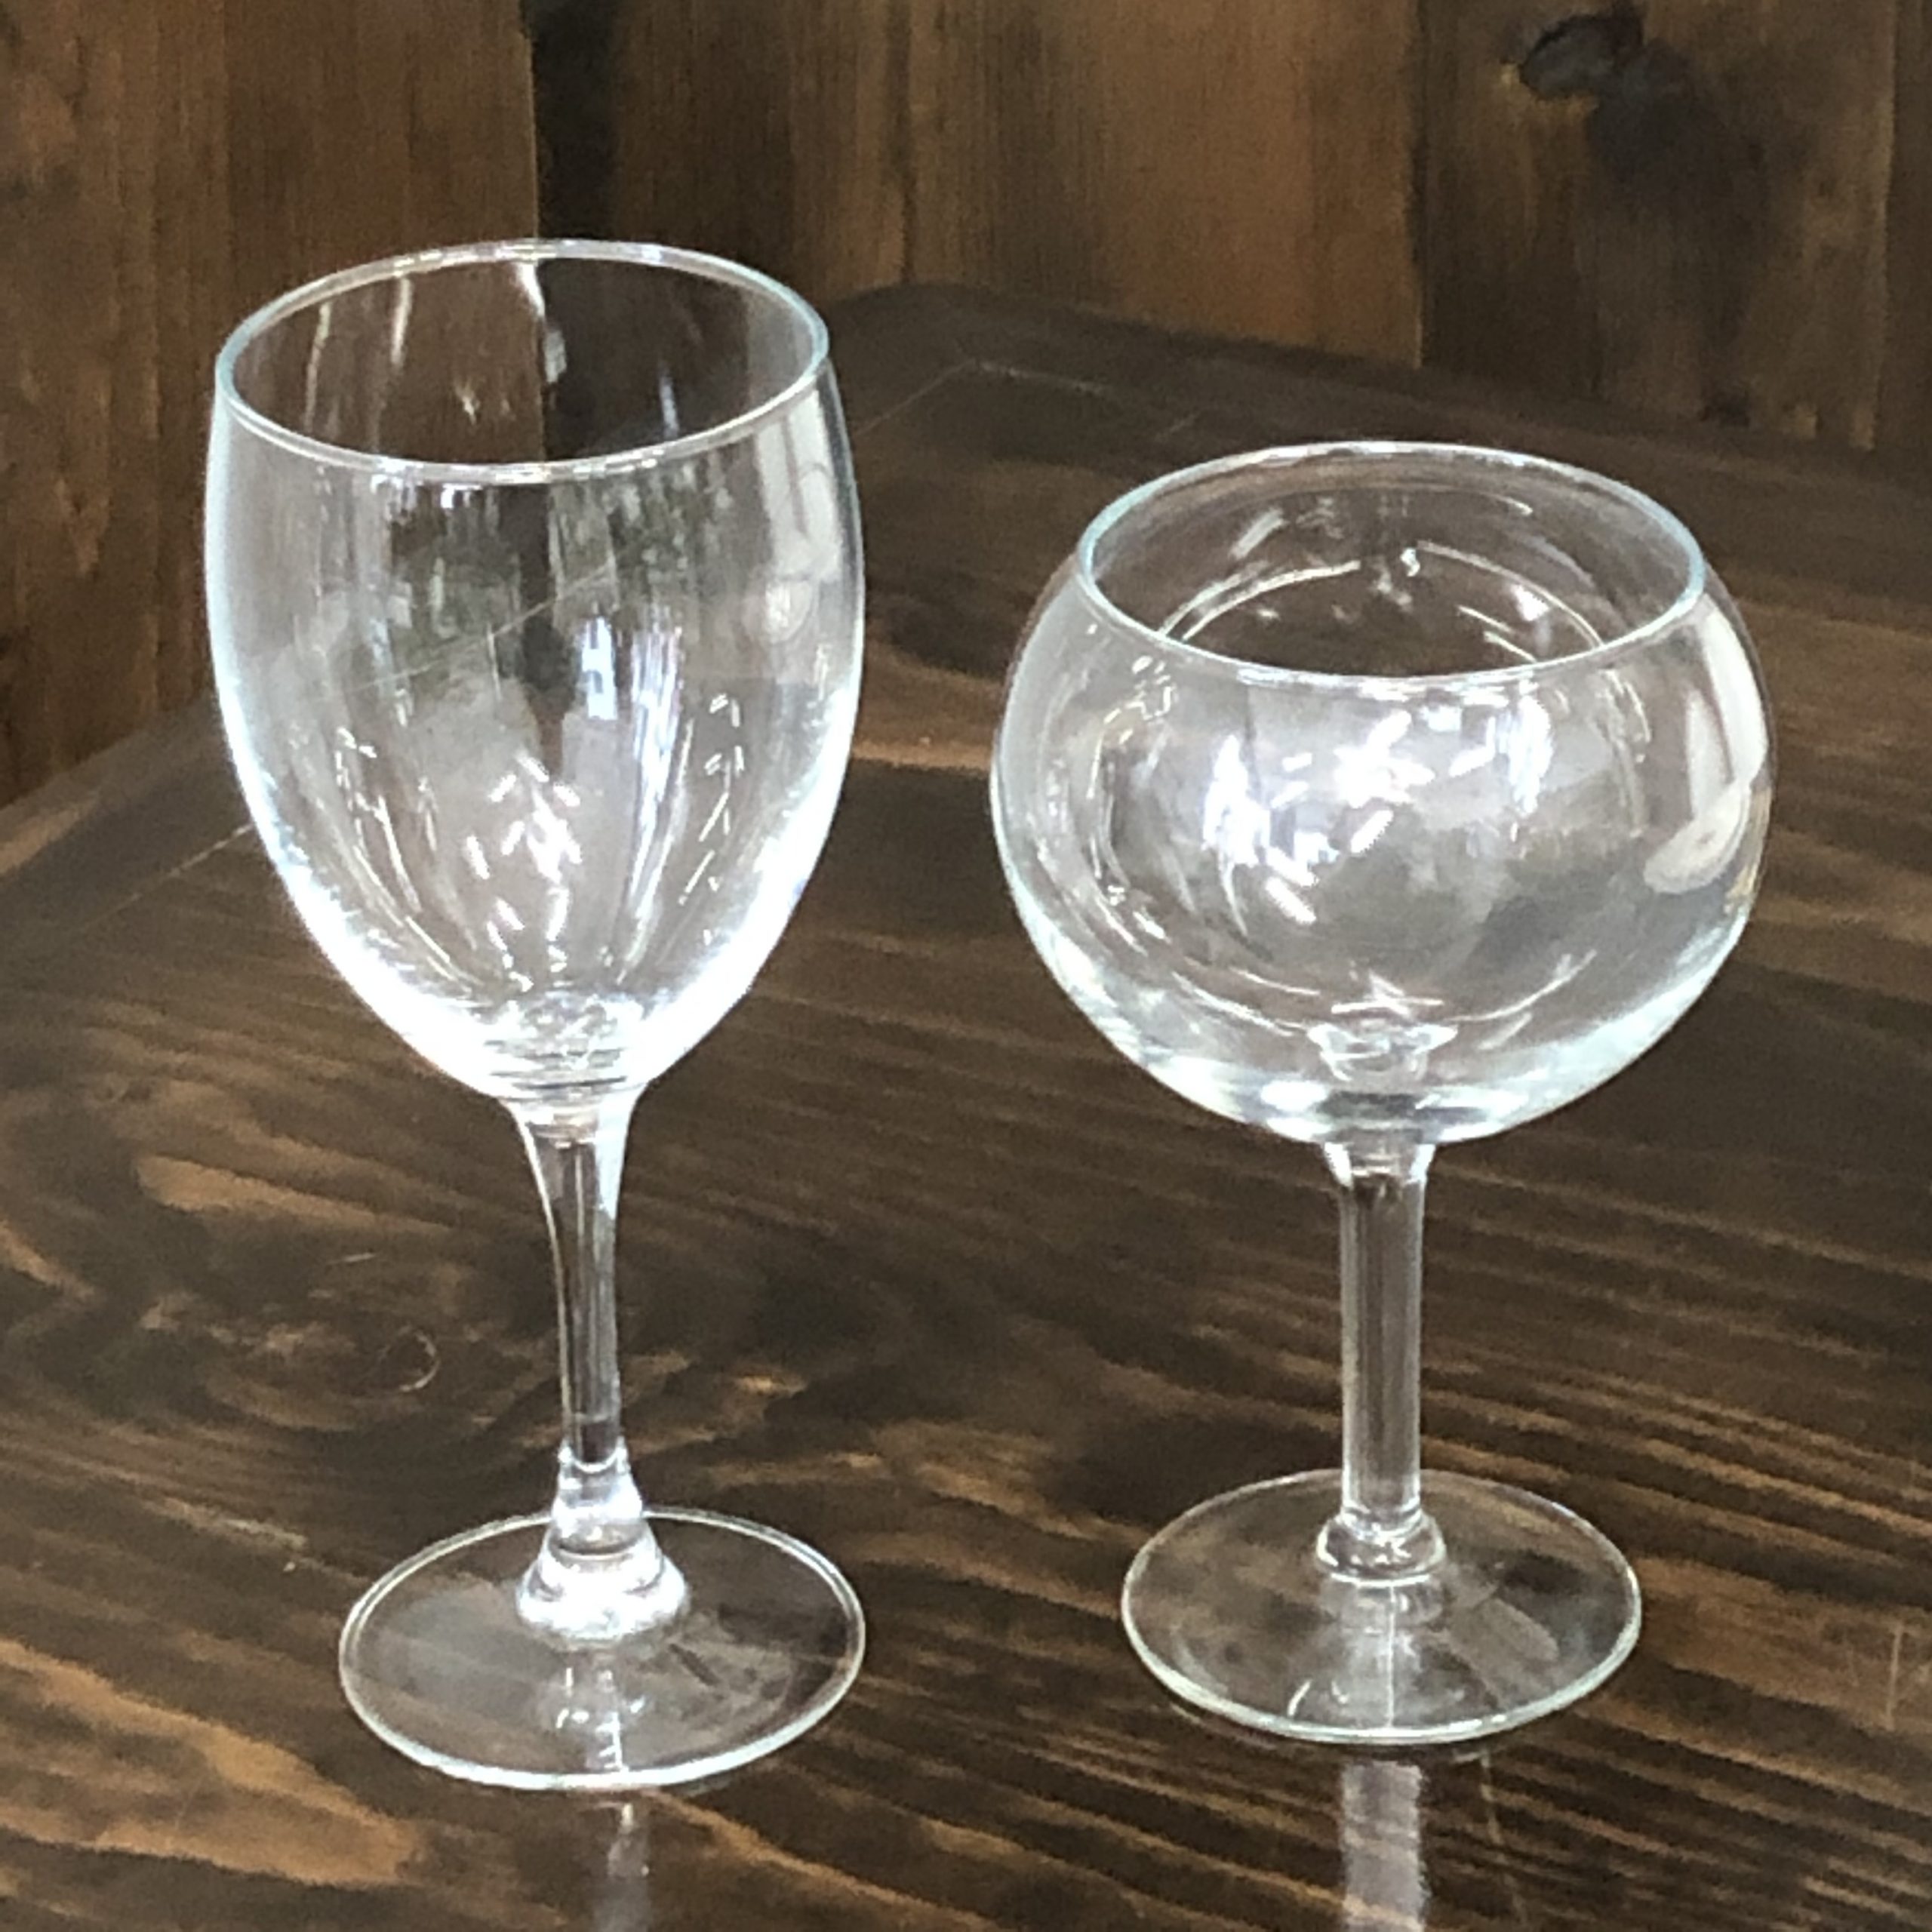 Wine Glasses Image